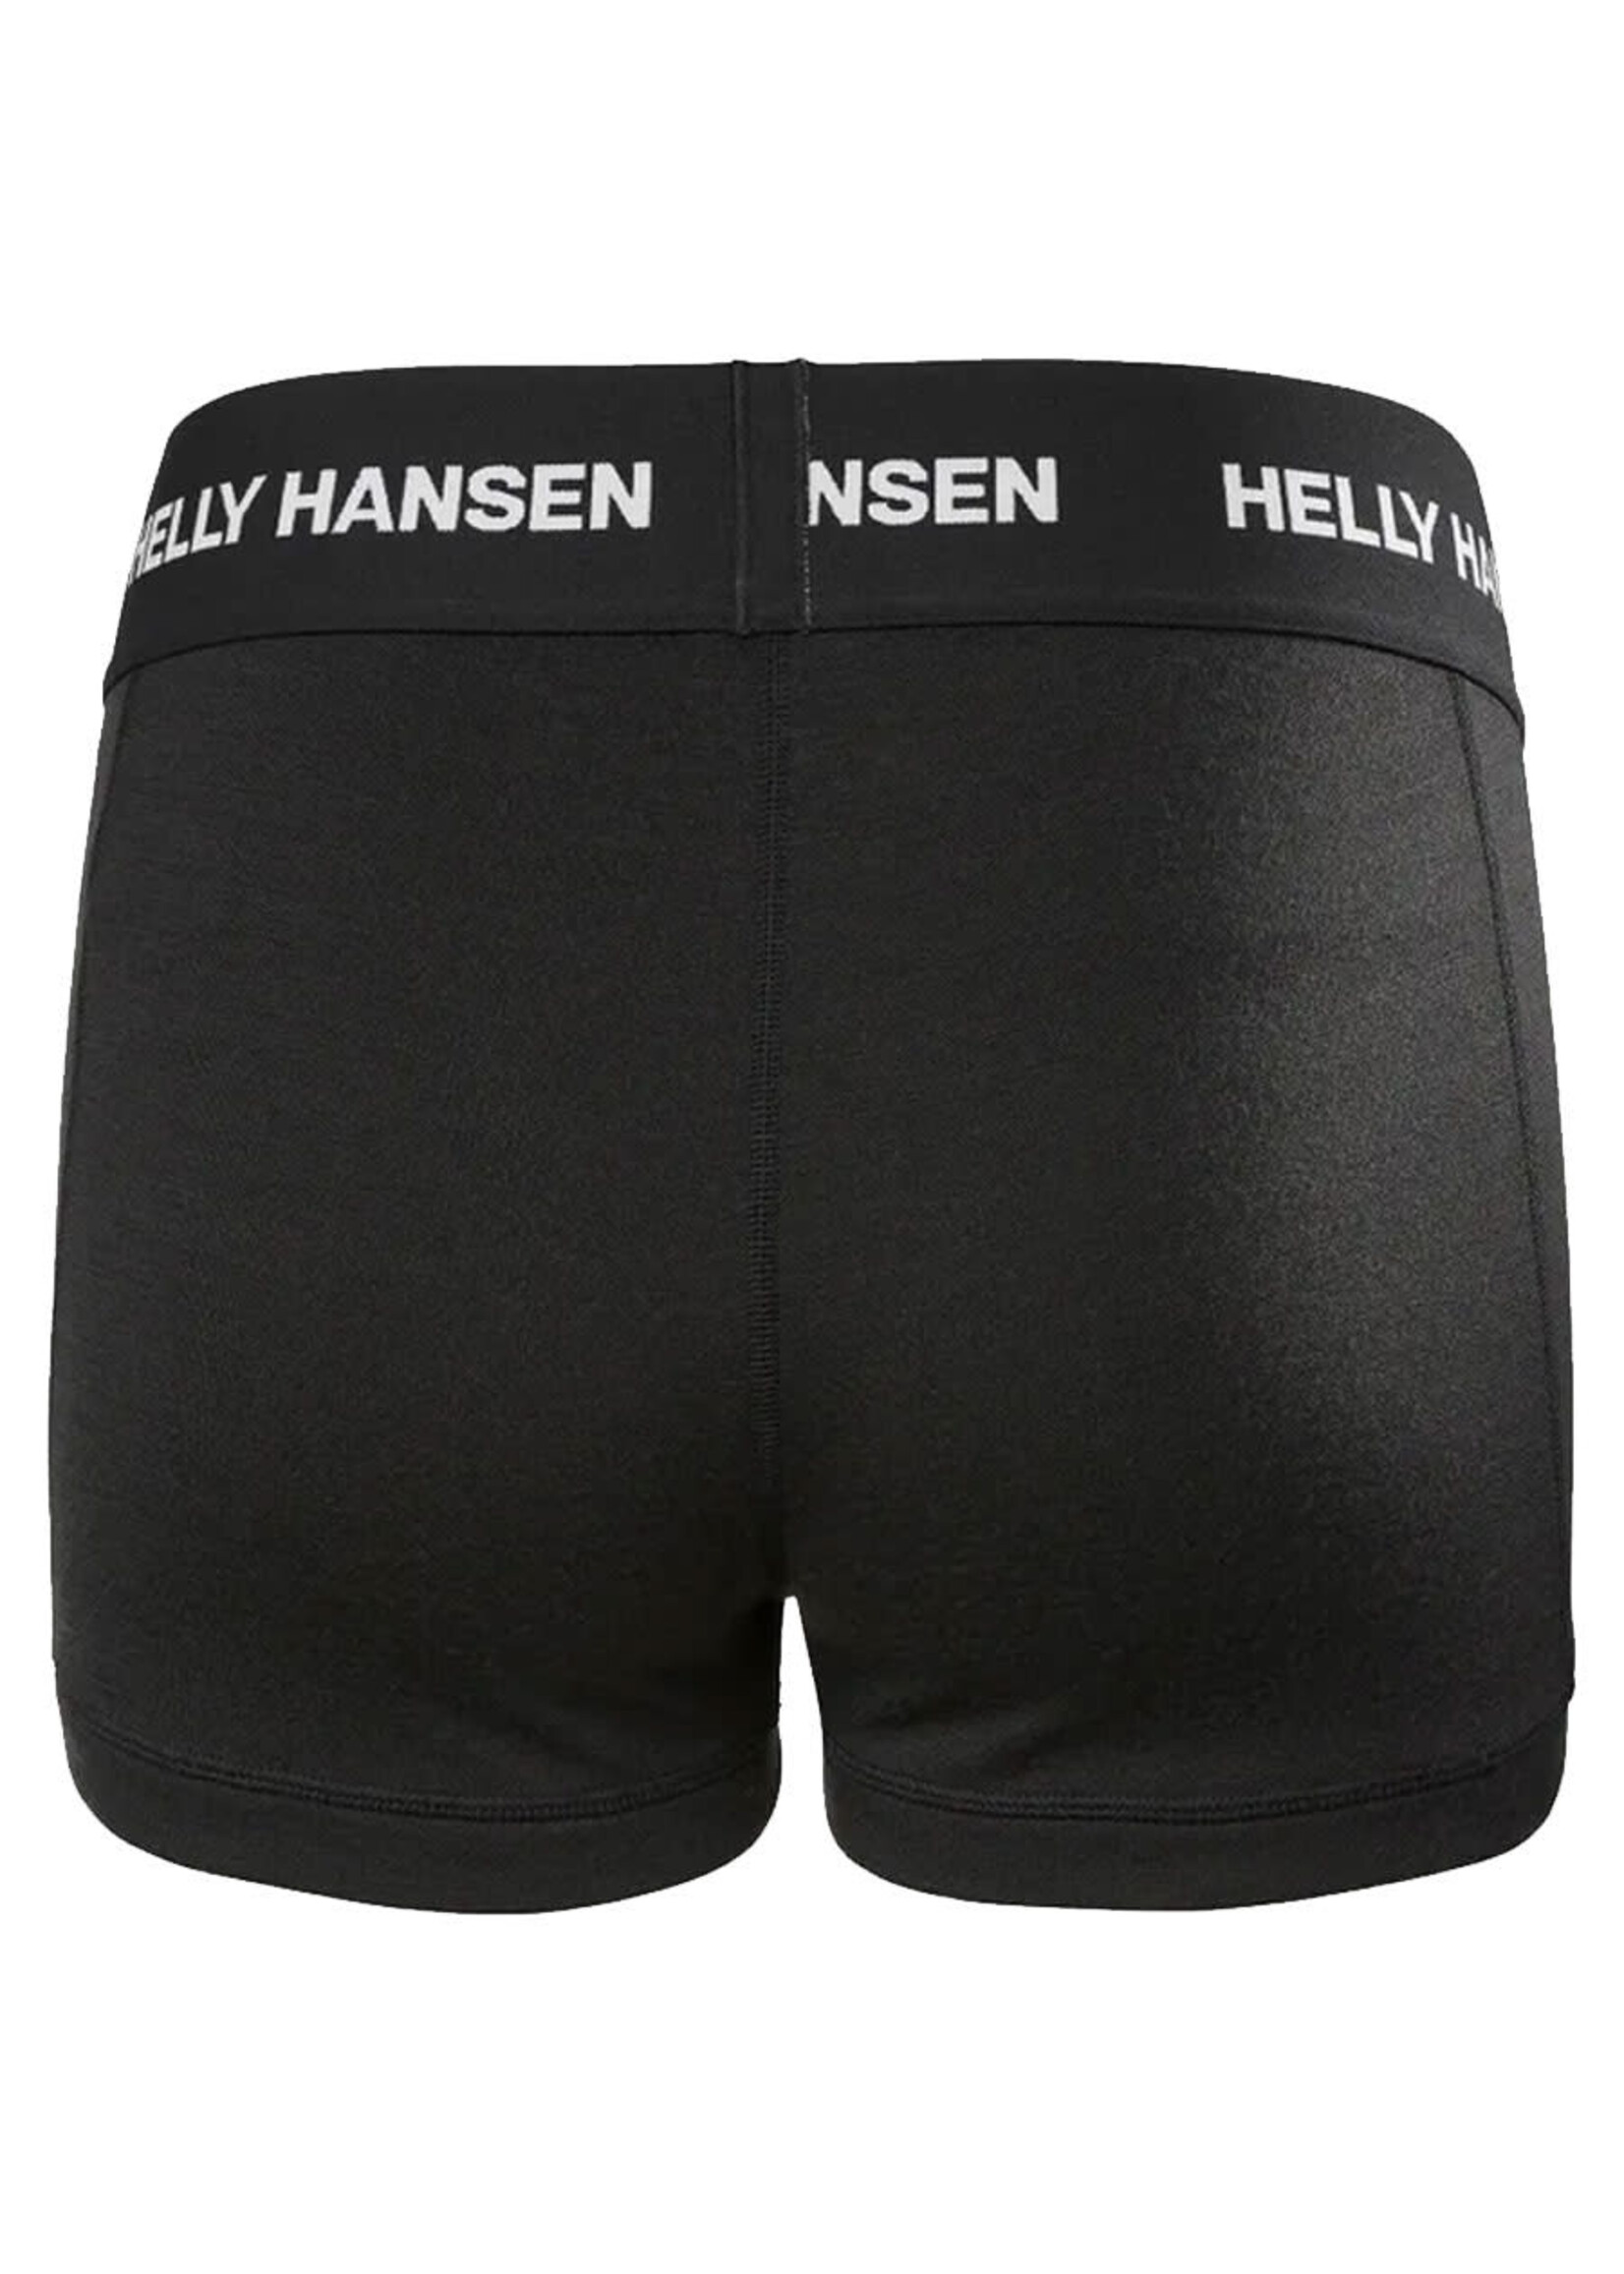 HELLY HANSEN Boxer pour femmes LIFA MERINO / Noir